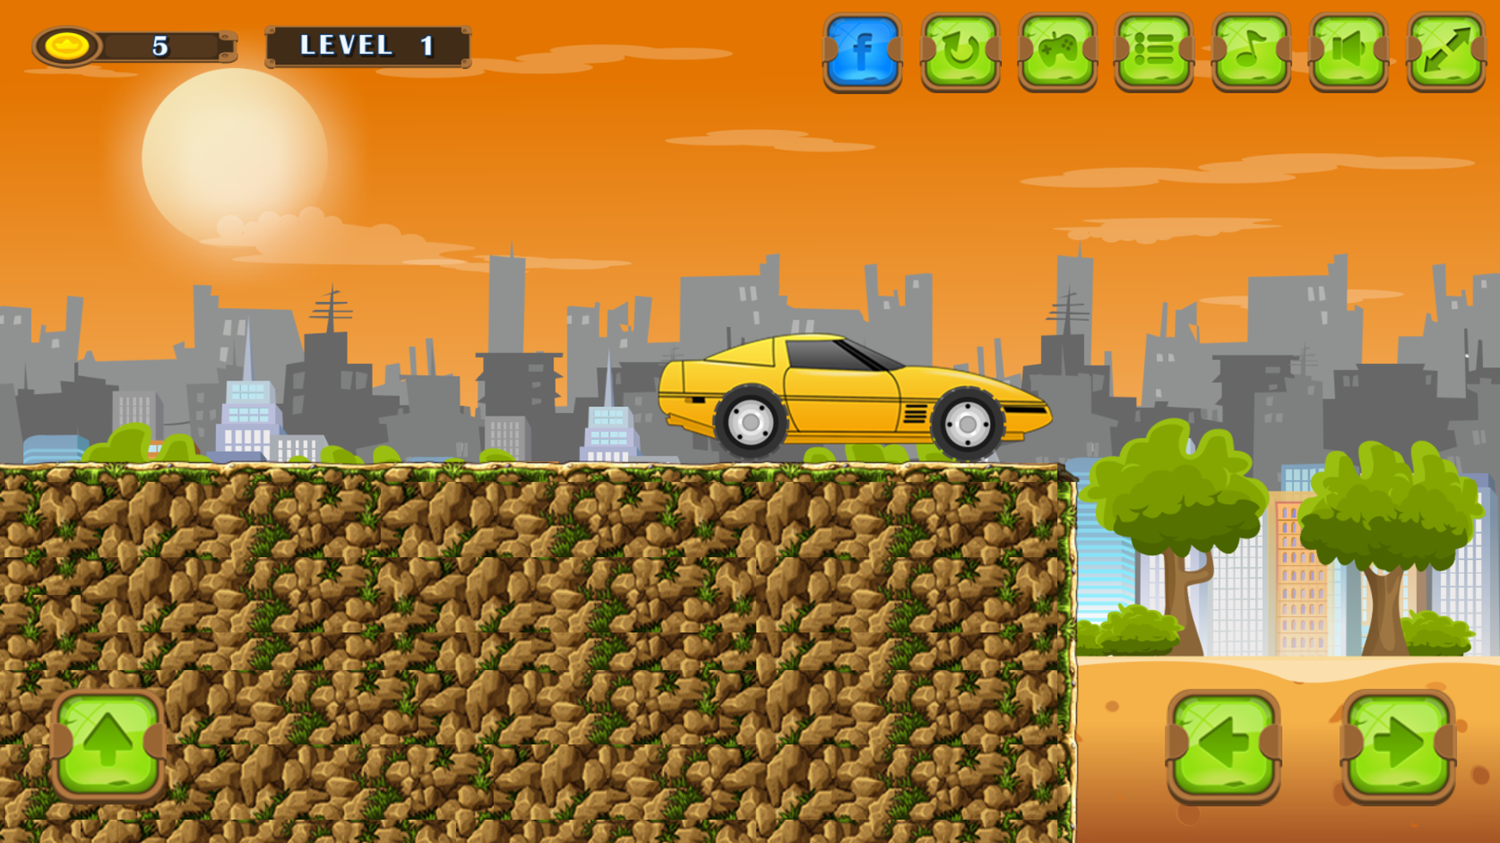 Car Backwheel Game Level Complete Screenshot.